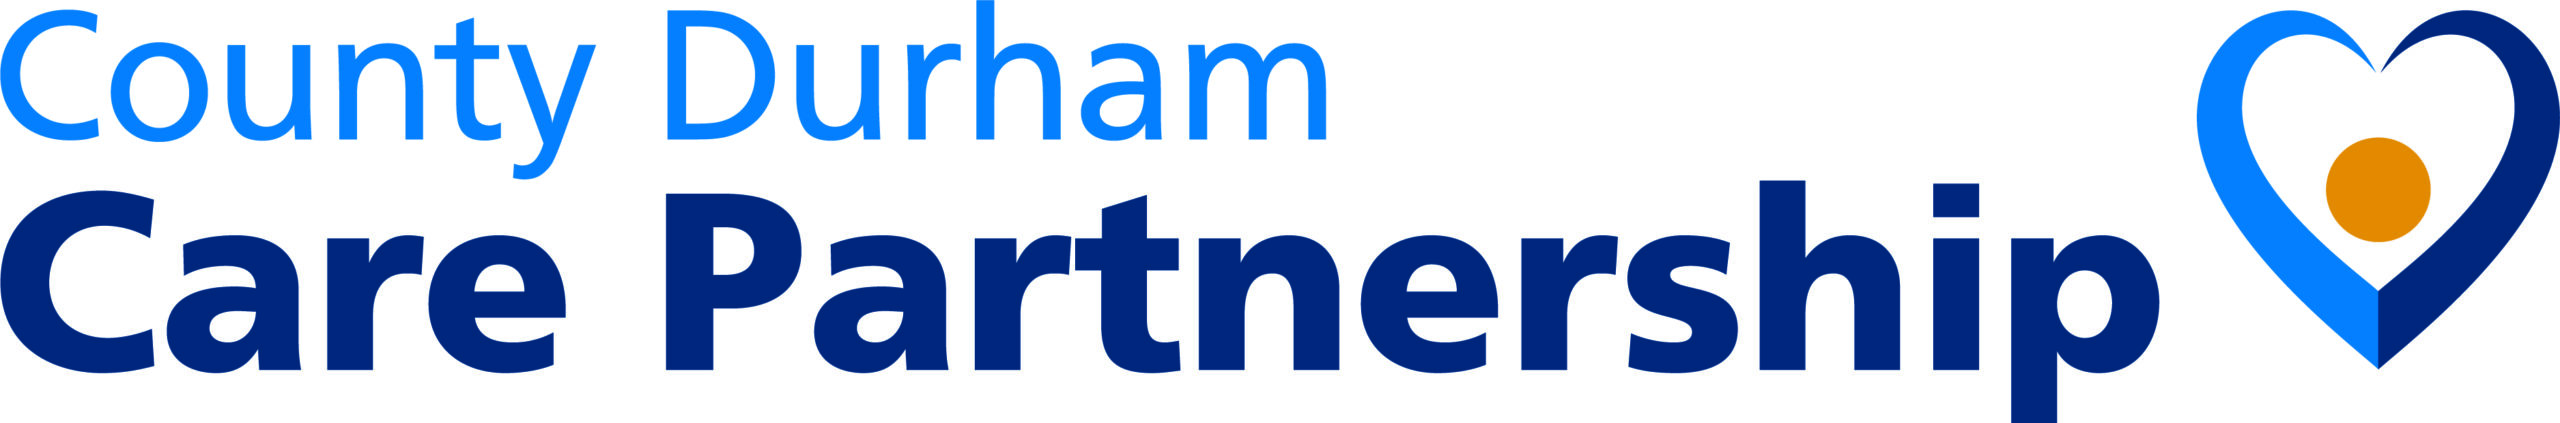 County Durham Care Partnership logo